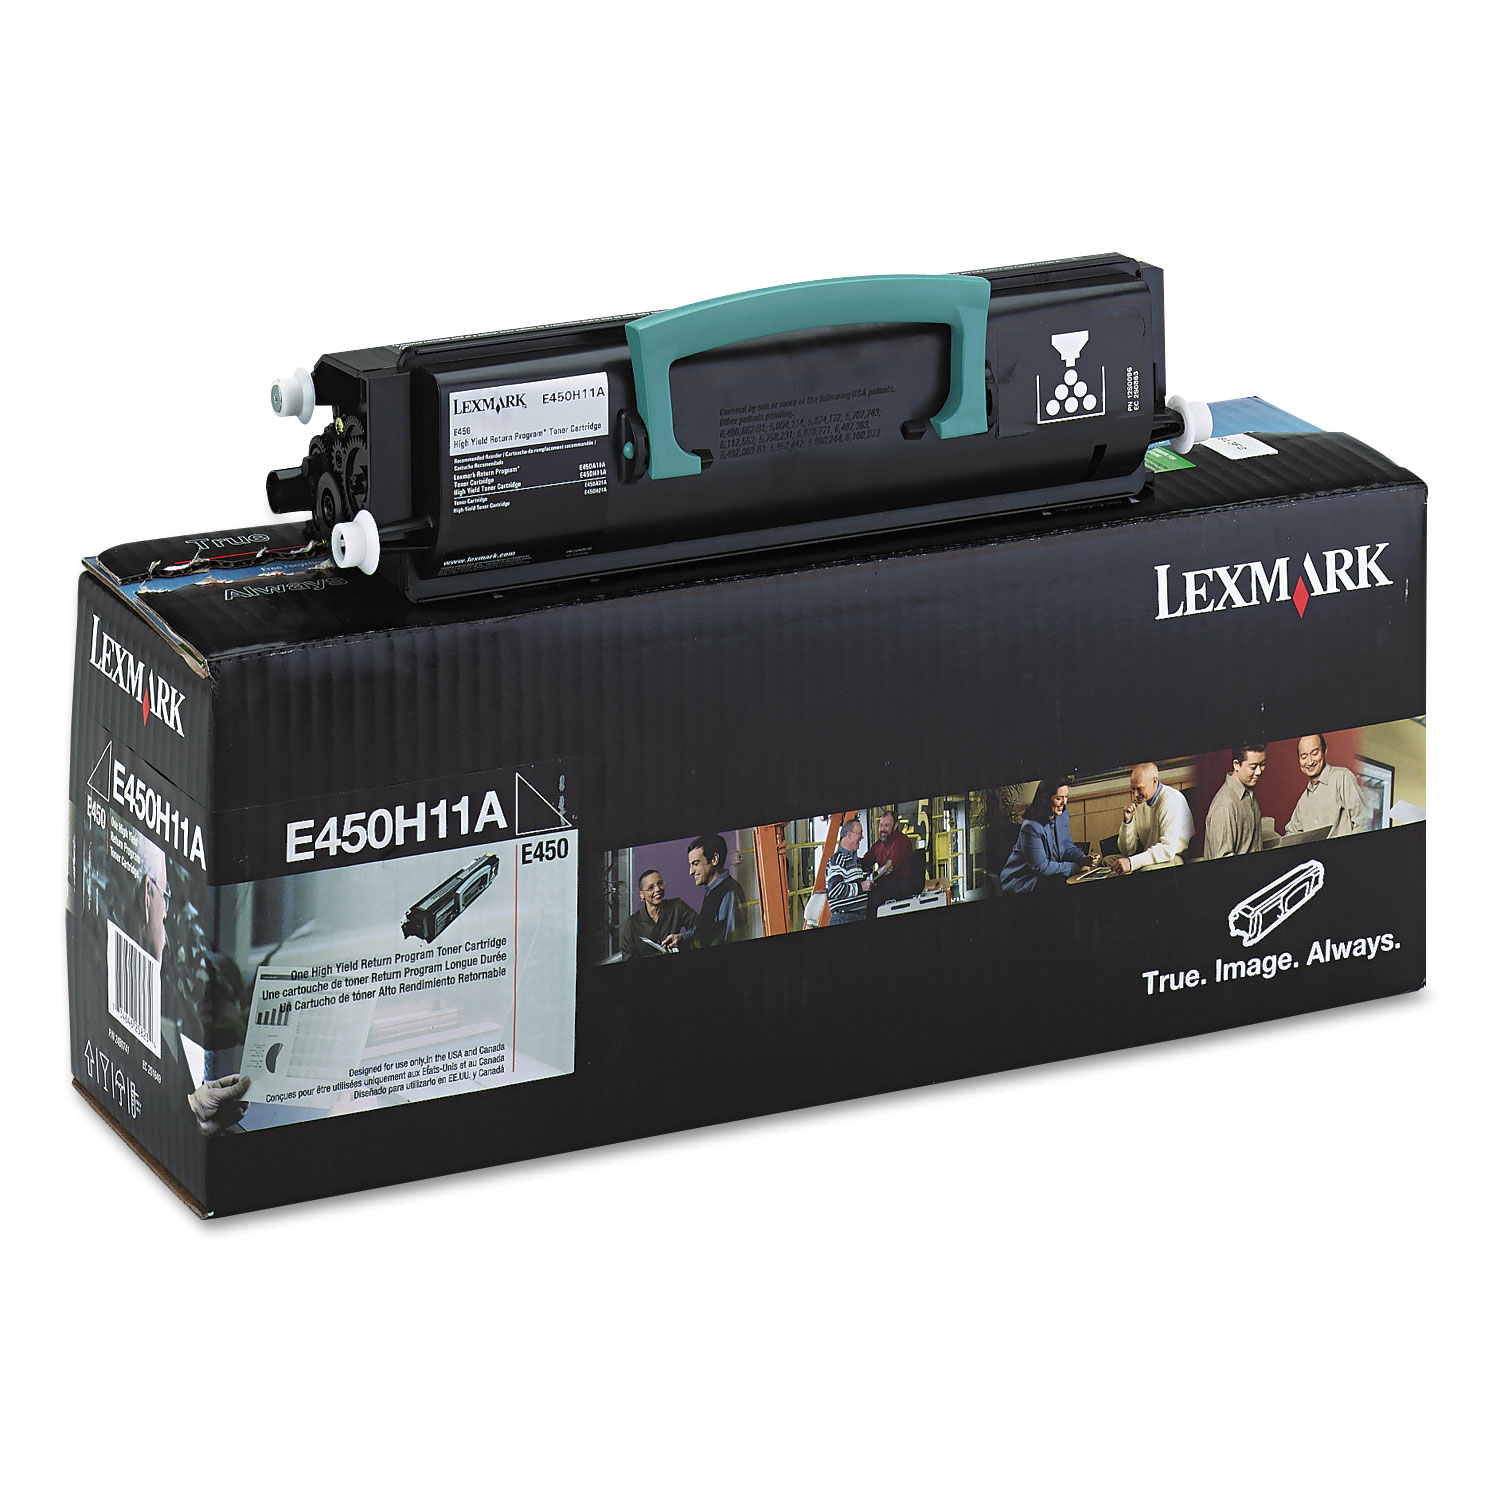  Lexmark E450H11A E450H11A Return Program Toner, 11000 Page-Yield, Black (LEXE450H11A) 